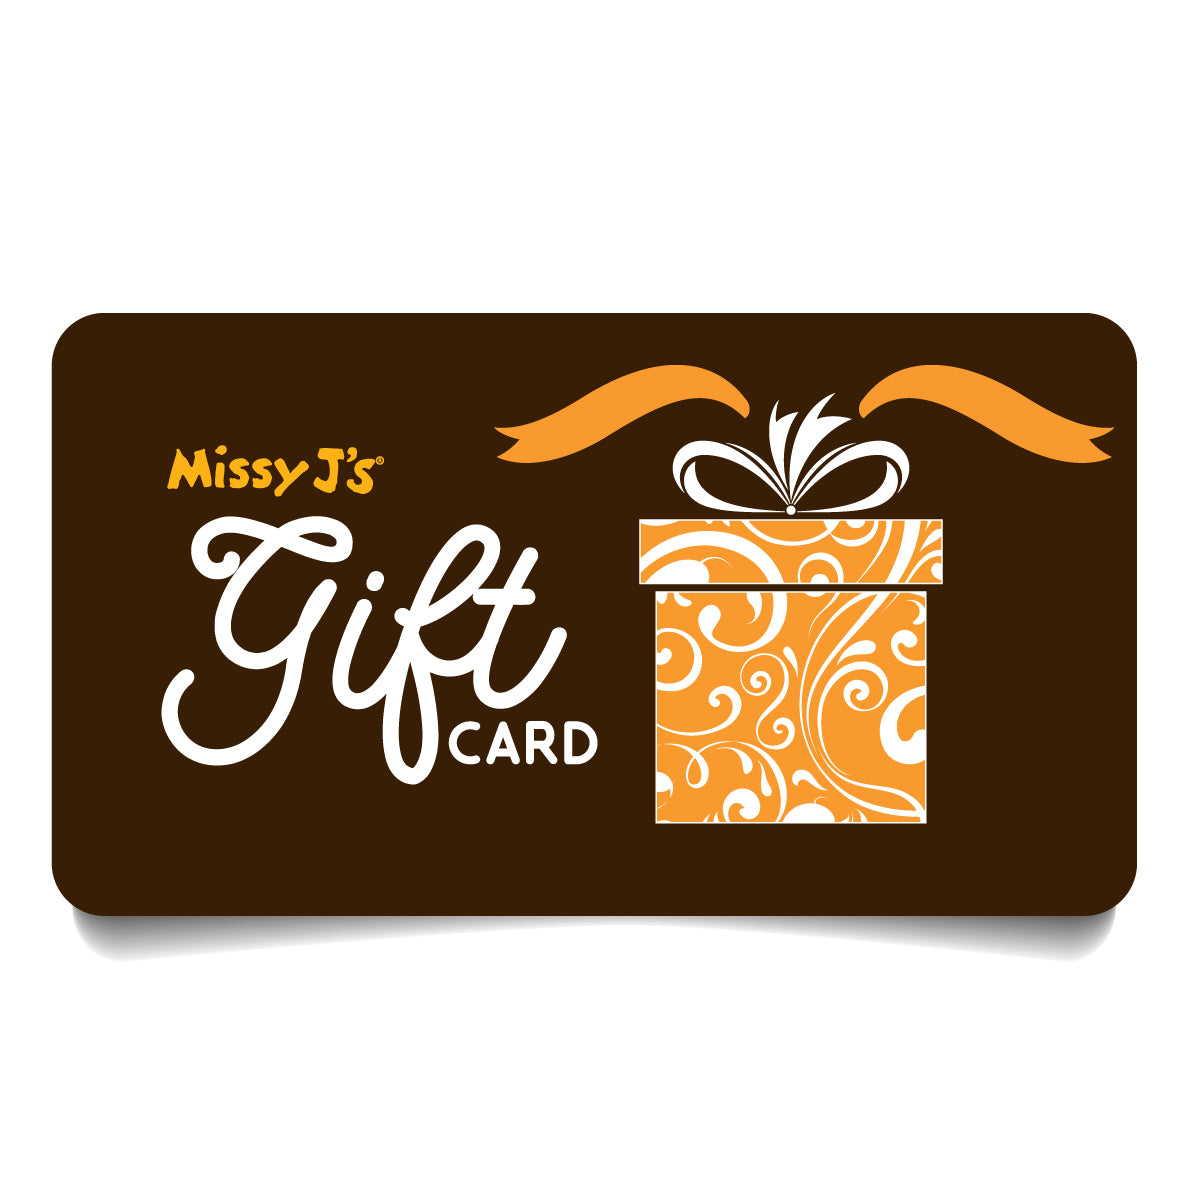 Missy J's Gift Card